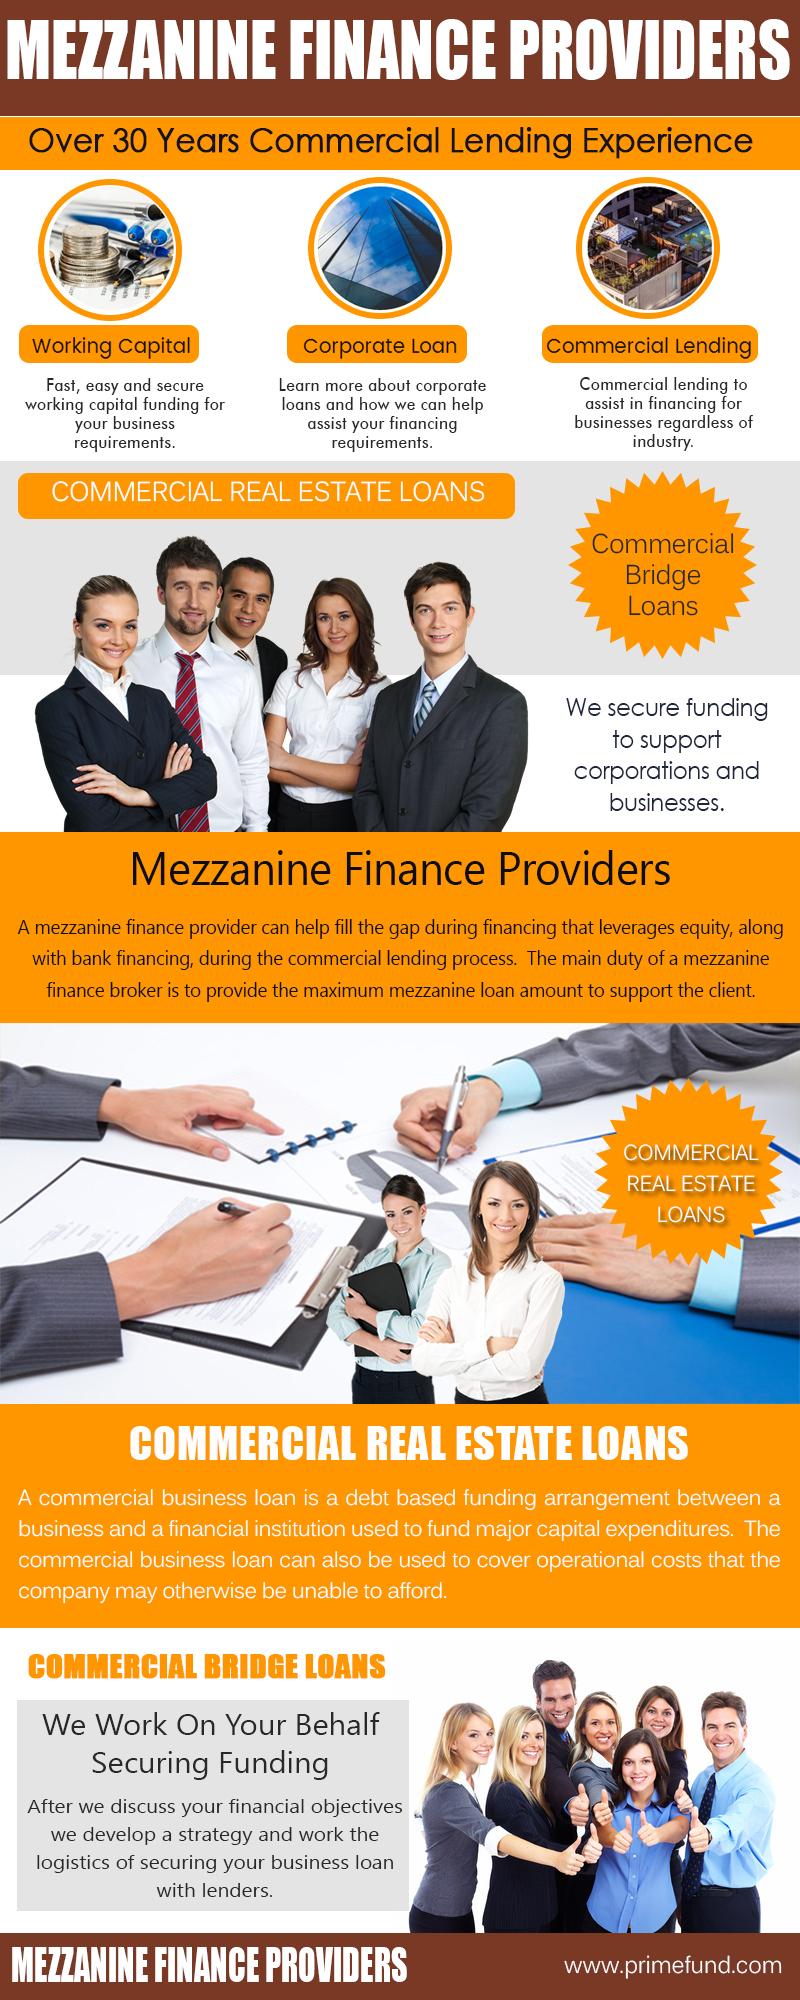 Mezzanine Finance Providers